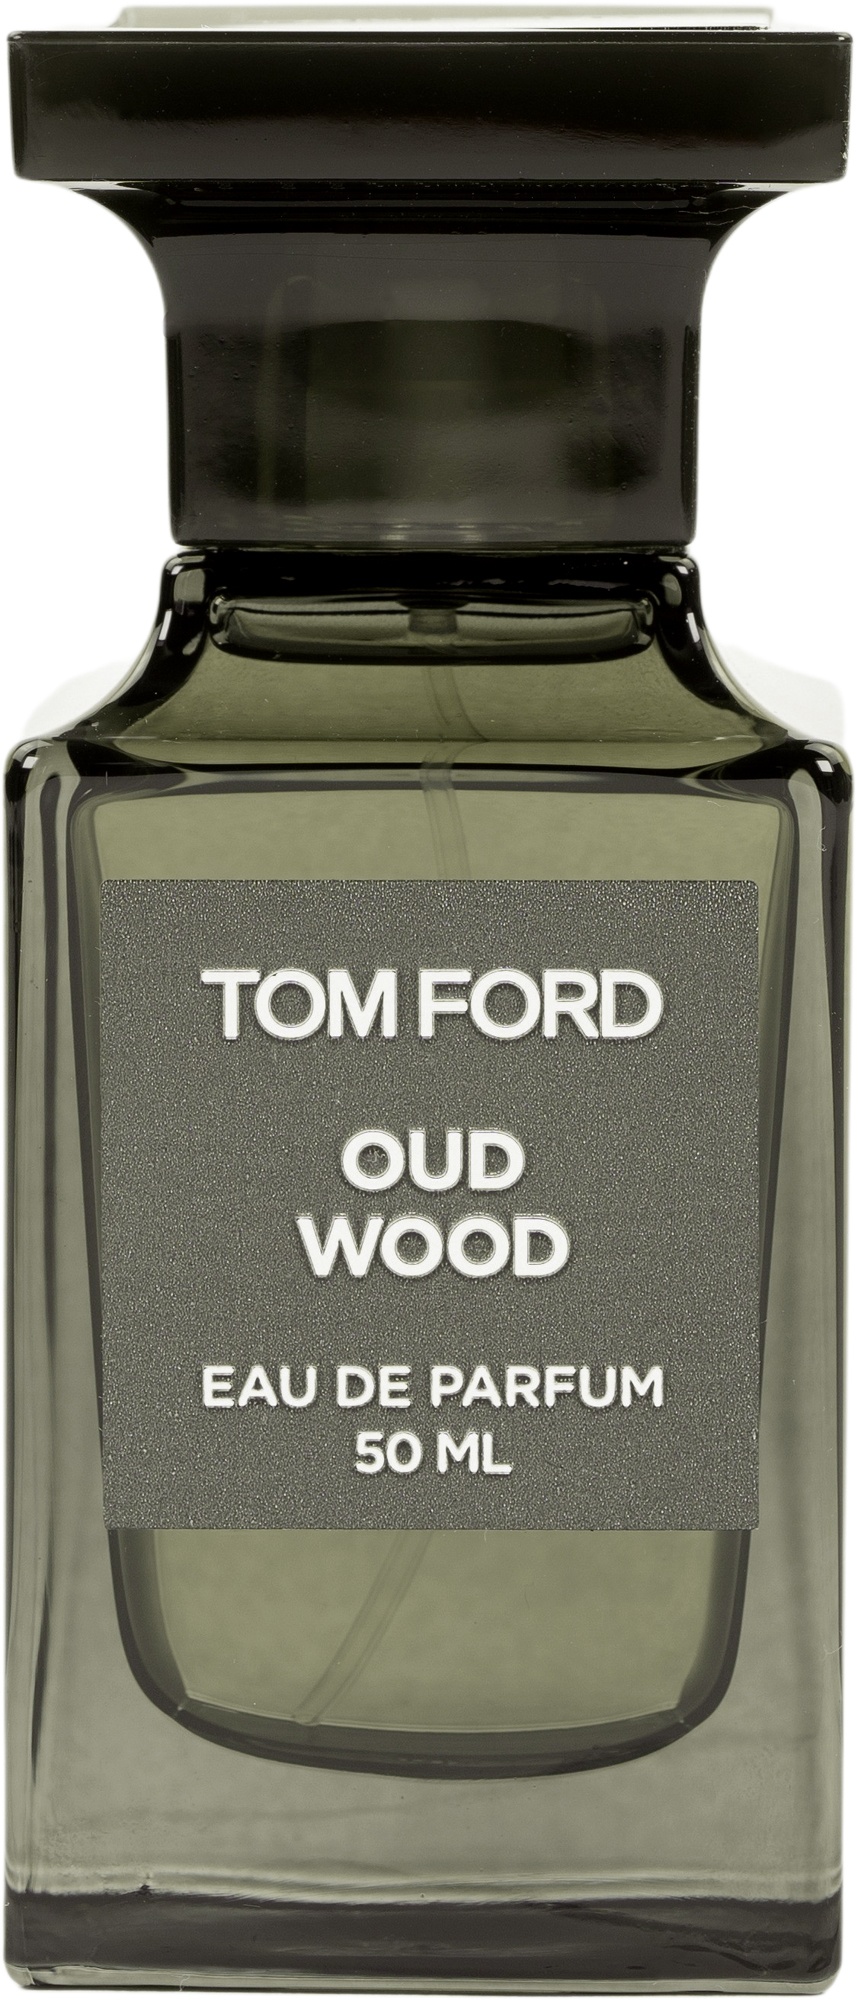 Bild von Oud Wood Eau de Parfum 100 ml